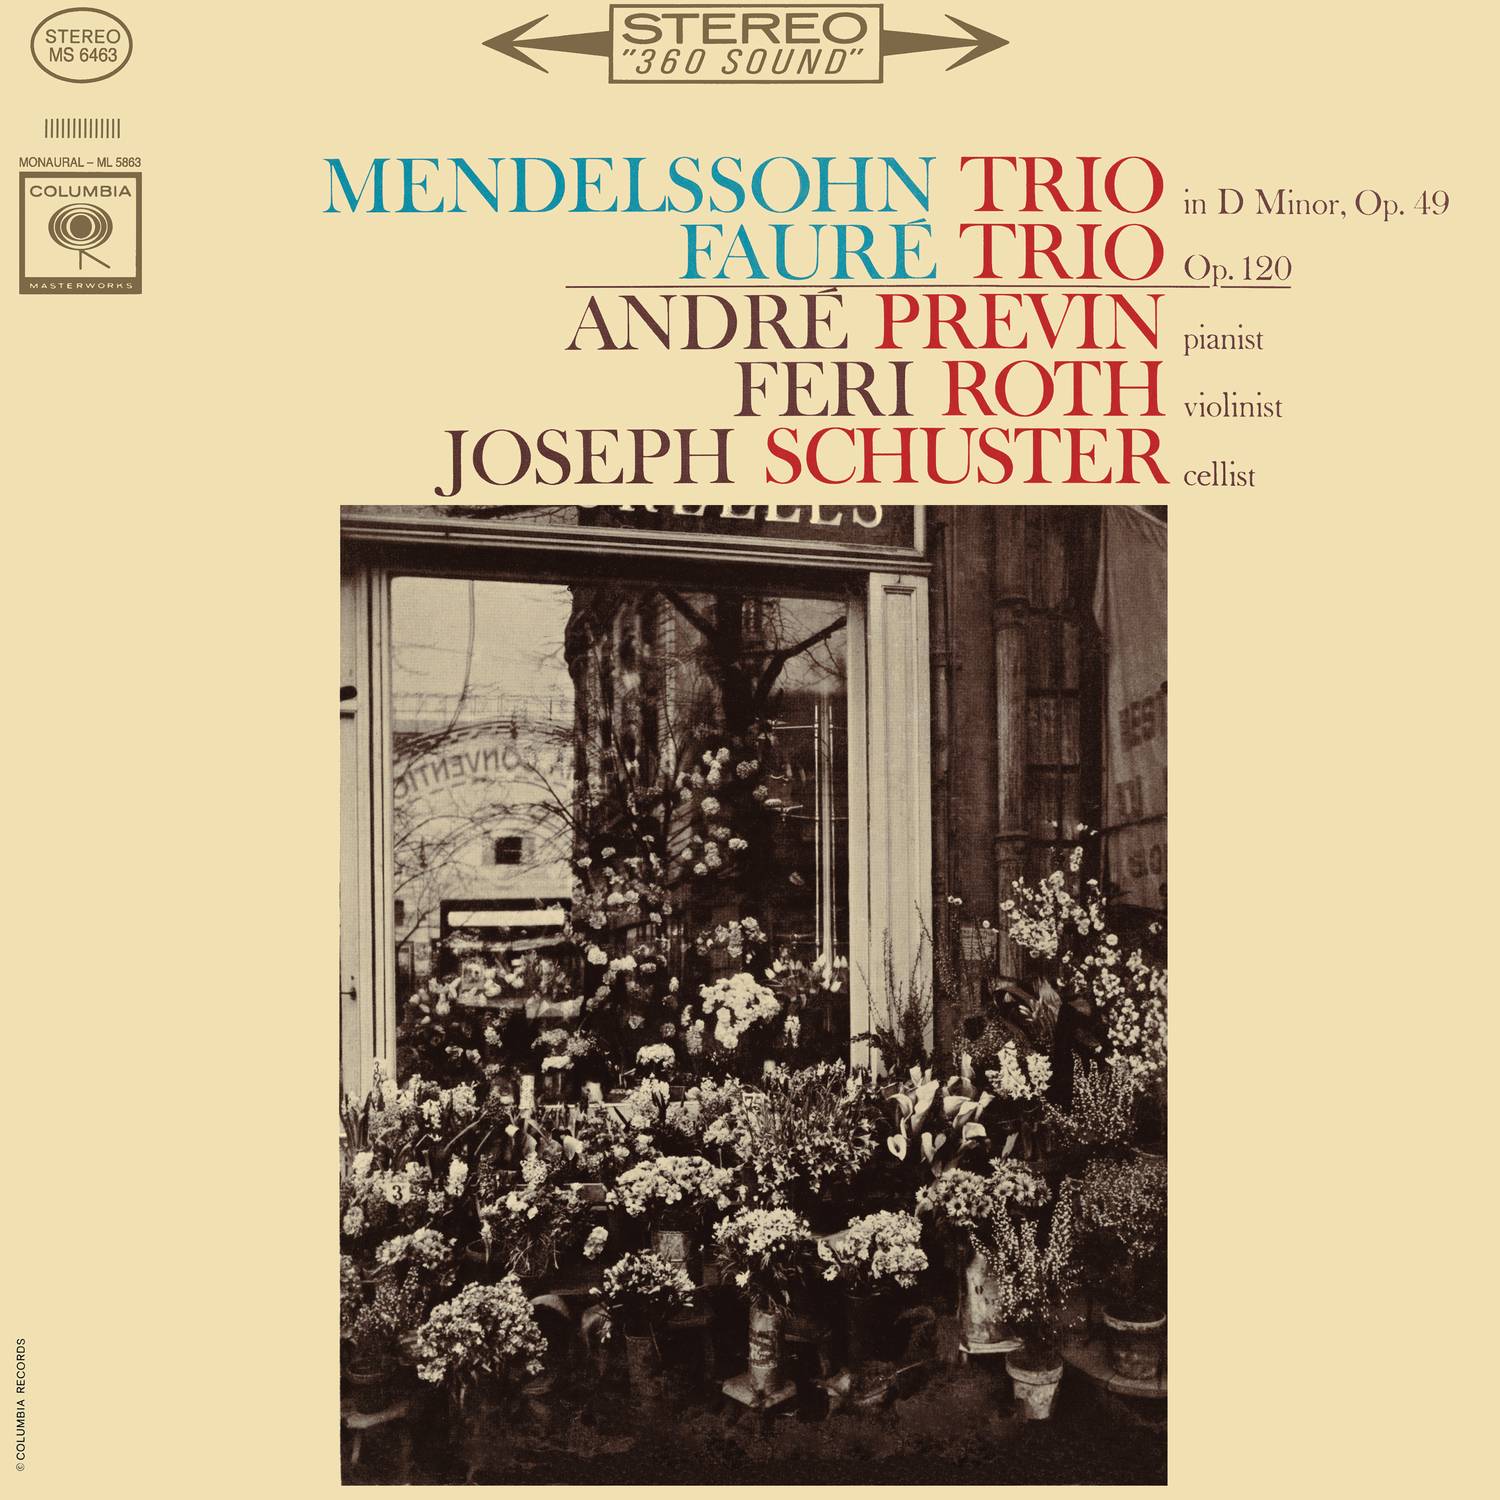 Mendelssohn: Piano Trio No. 1 in D Minor, Op. 49  Faure: Piano Trio in D Minor, Op. 120